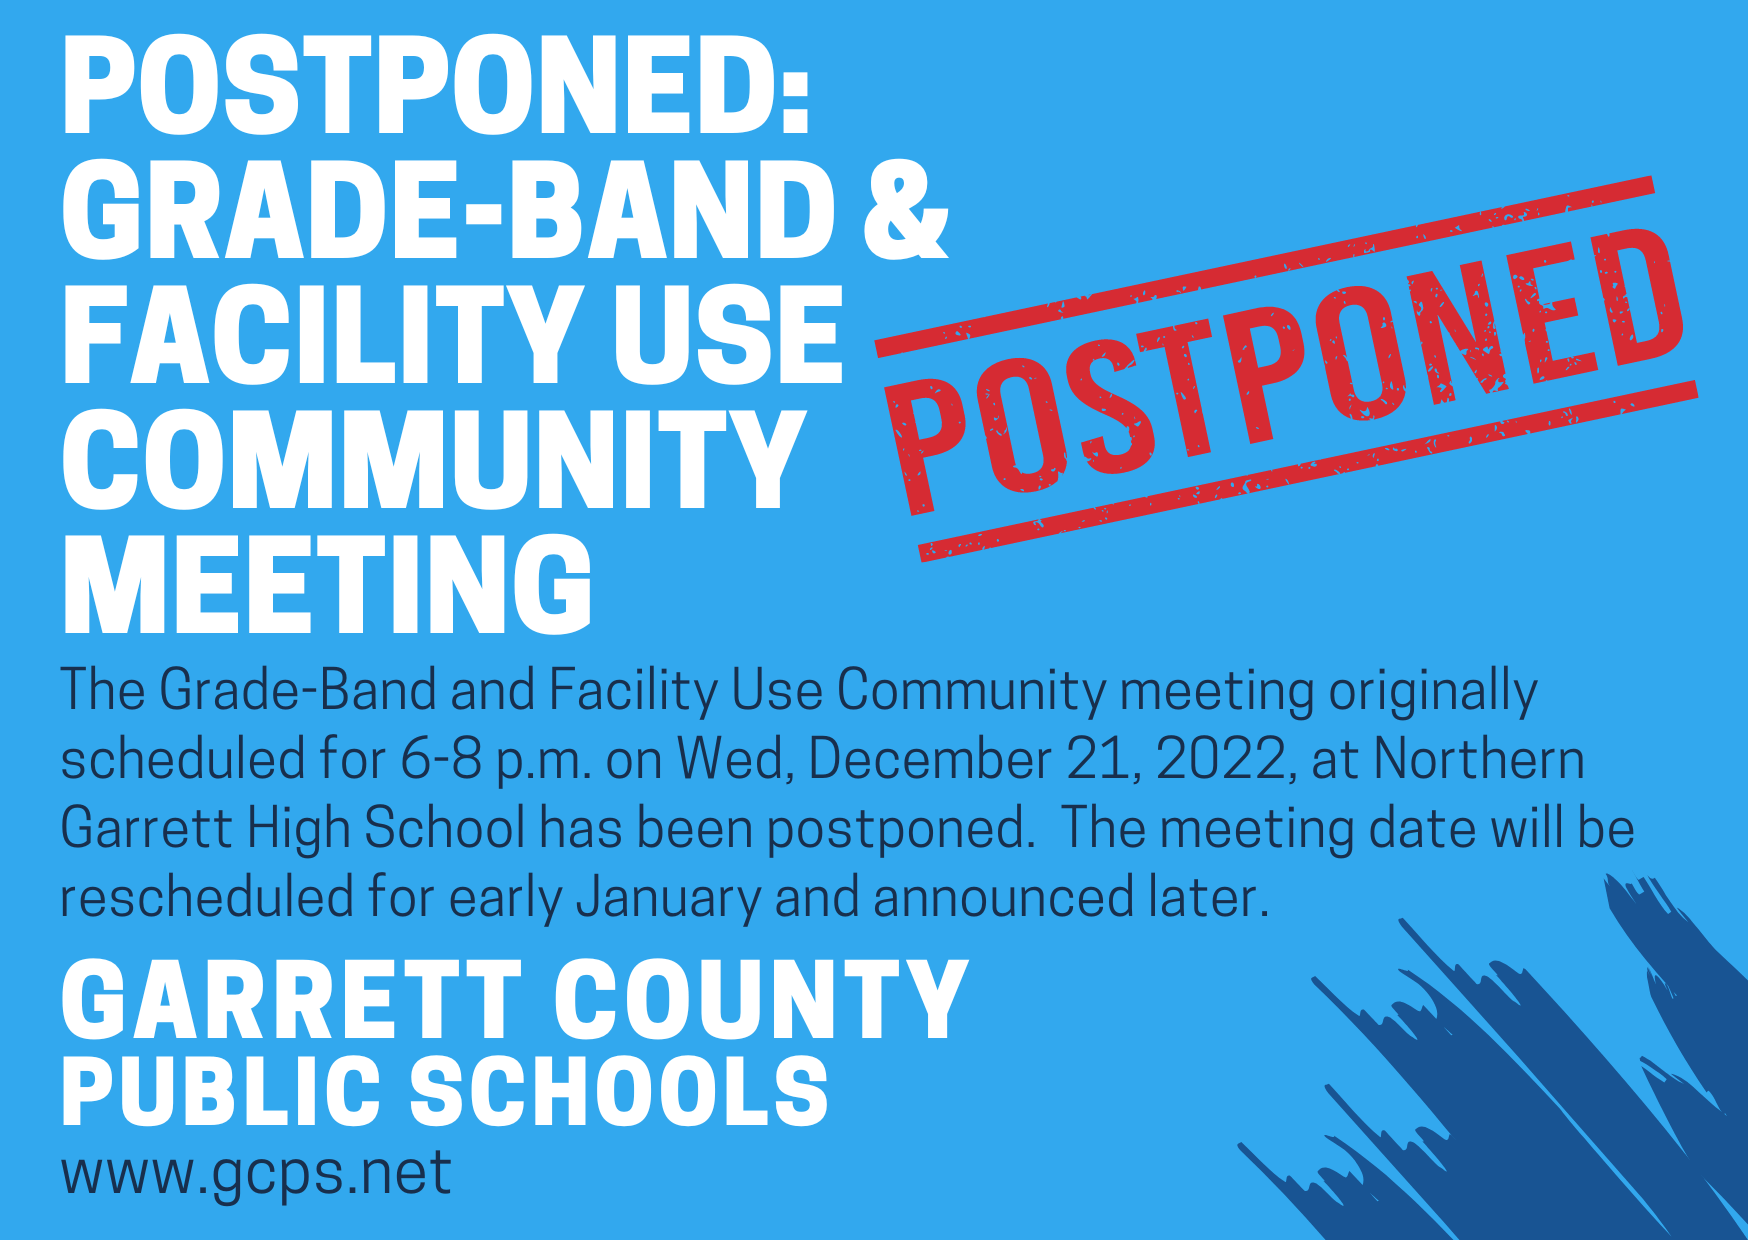 Grade-Band & Facility Use Community Meeting Postponed